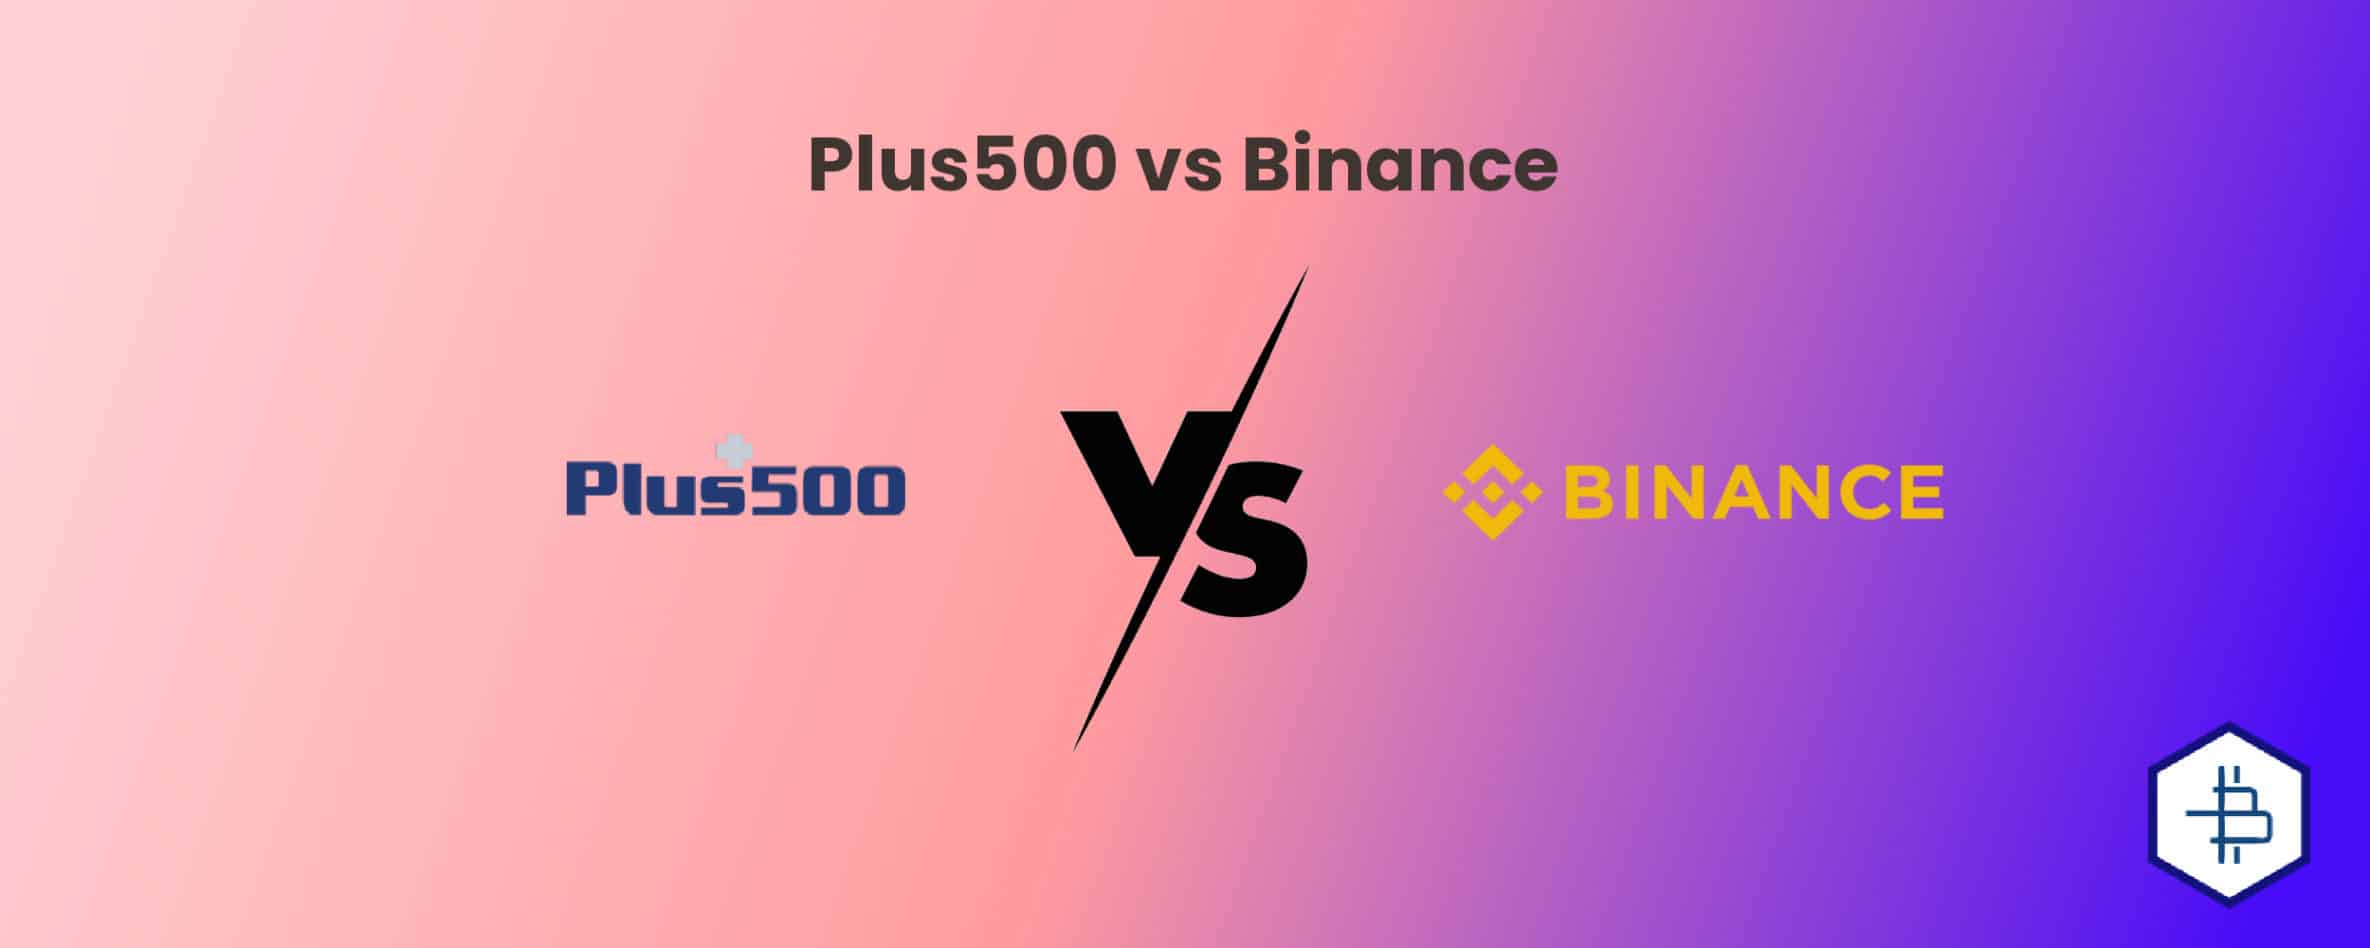 Plus500 vs Binance